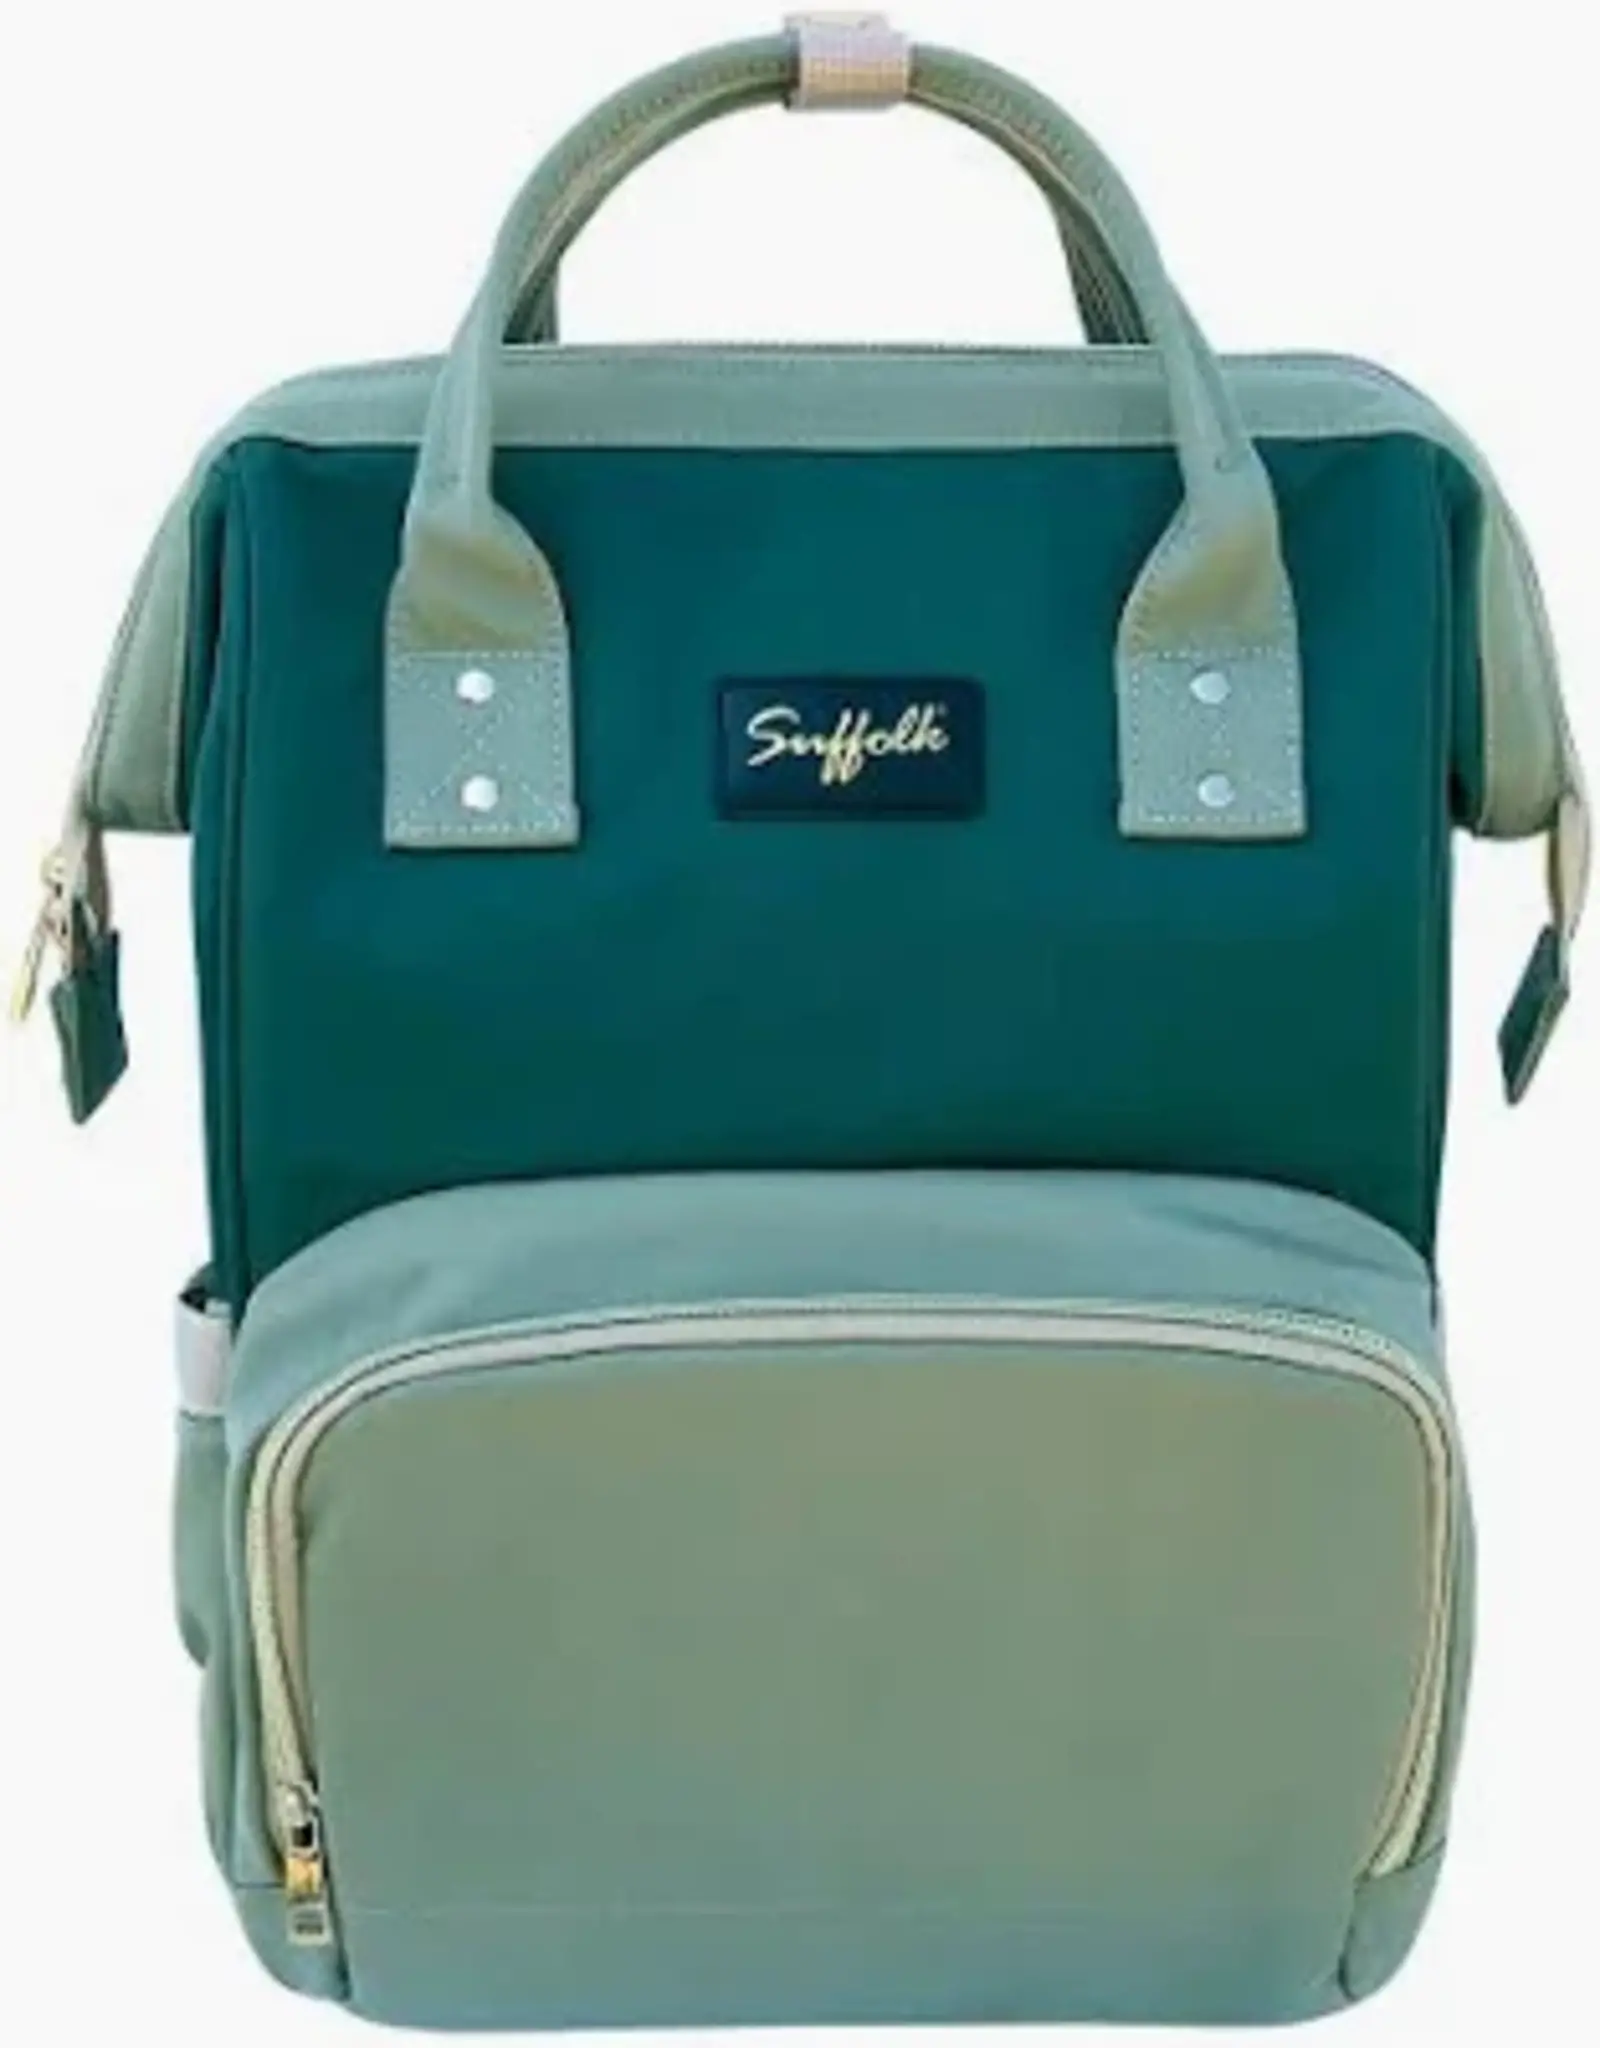 Suffolk The Company Bag